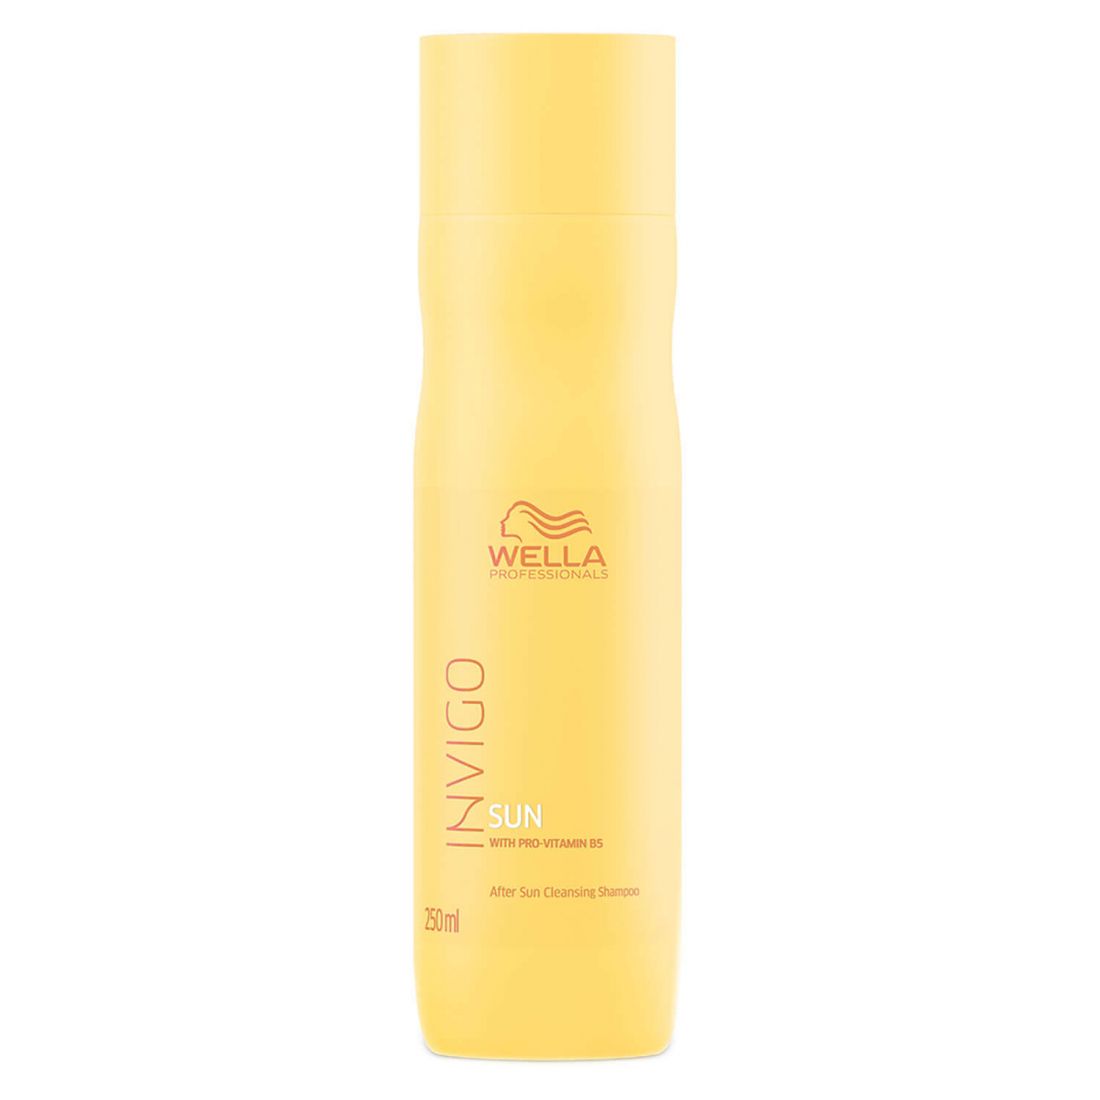 Wella Professional - Shampoing après soleil 'Invigo Sun' - 250 ml